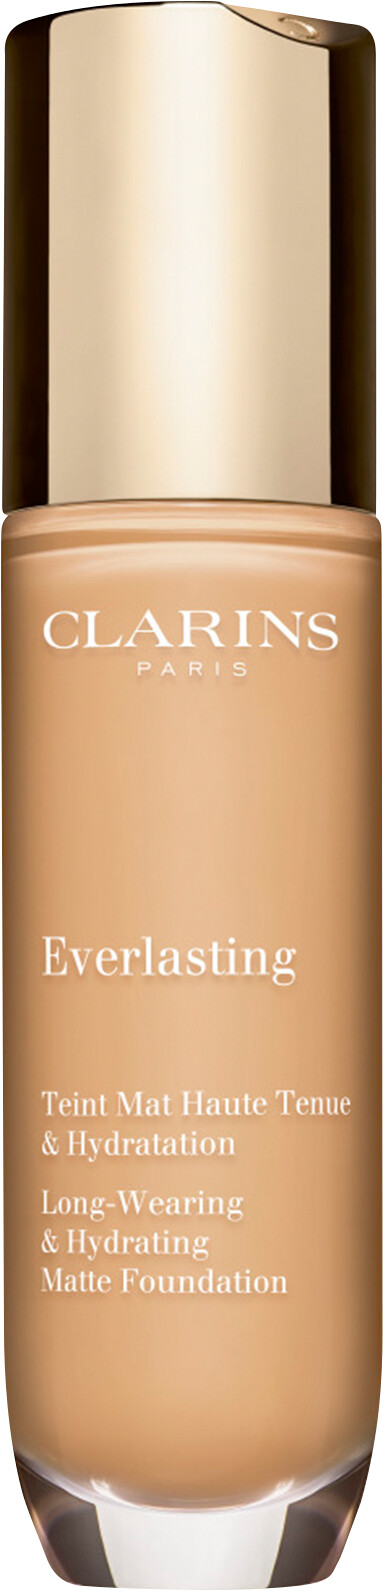 Clarins Everlasting Long-Wearing & Hydrating Matte Foundation 30ml 106N - Vanilla